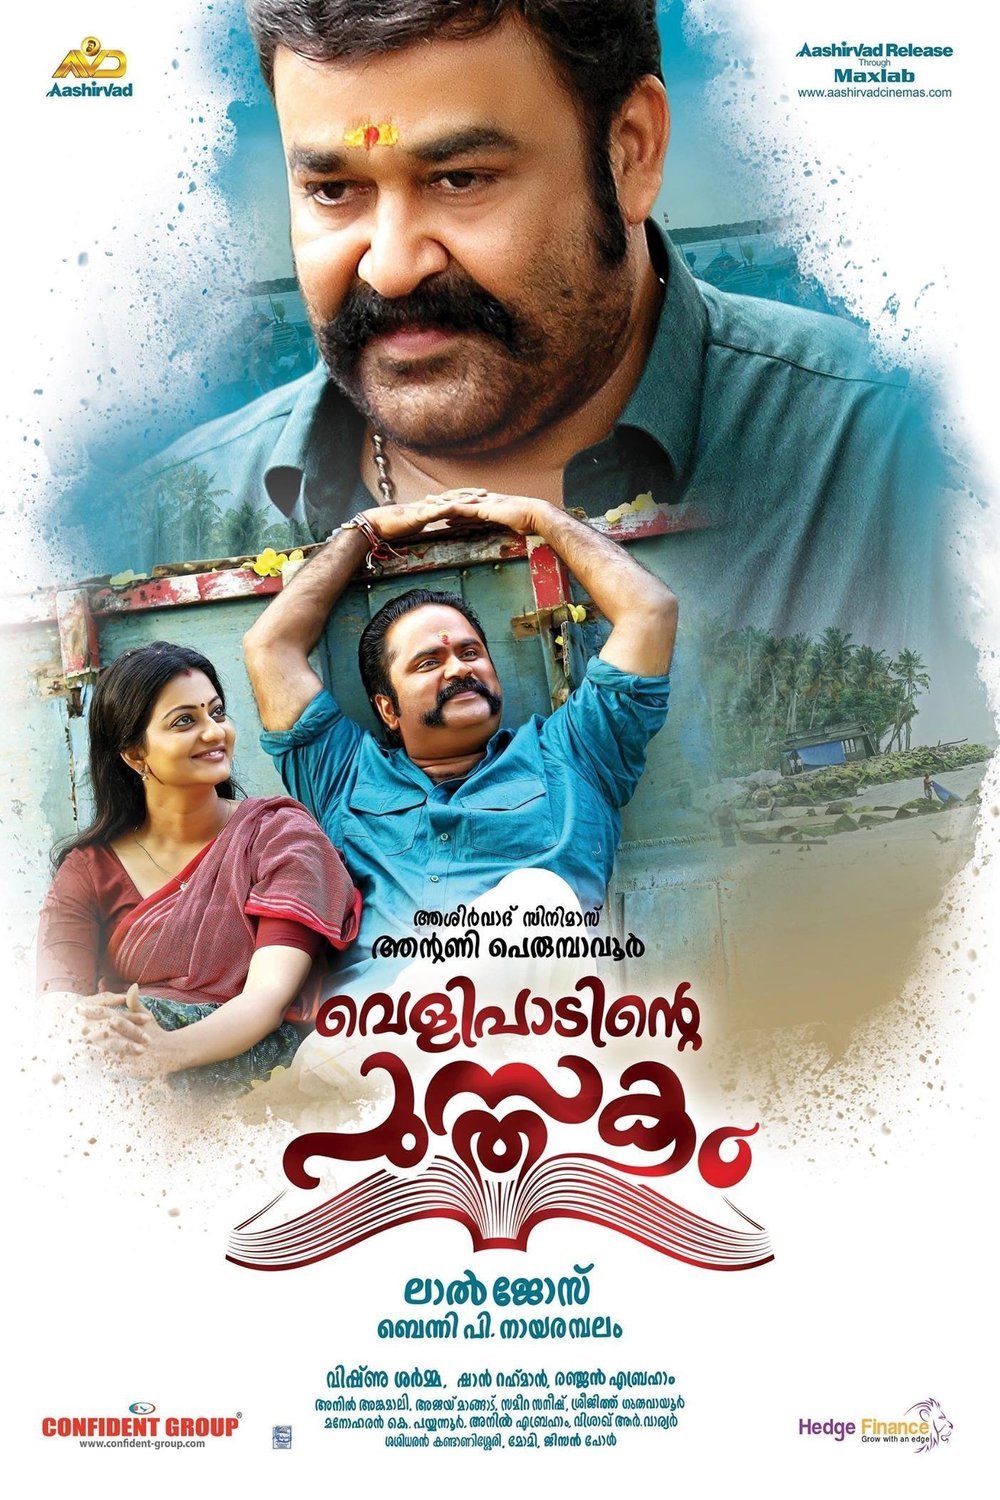 Malayalam poster of the movie Velipadinte Pusthakam